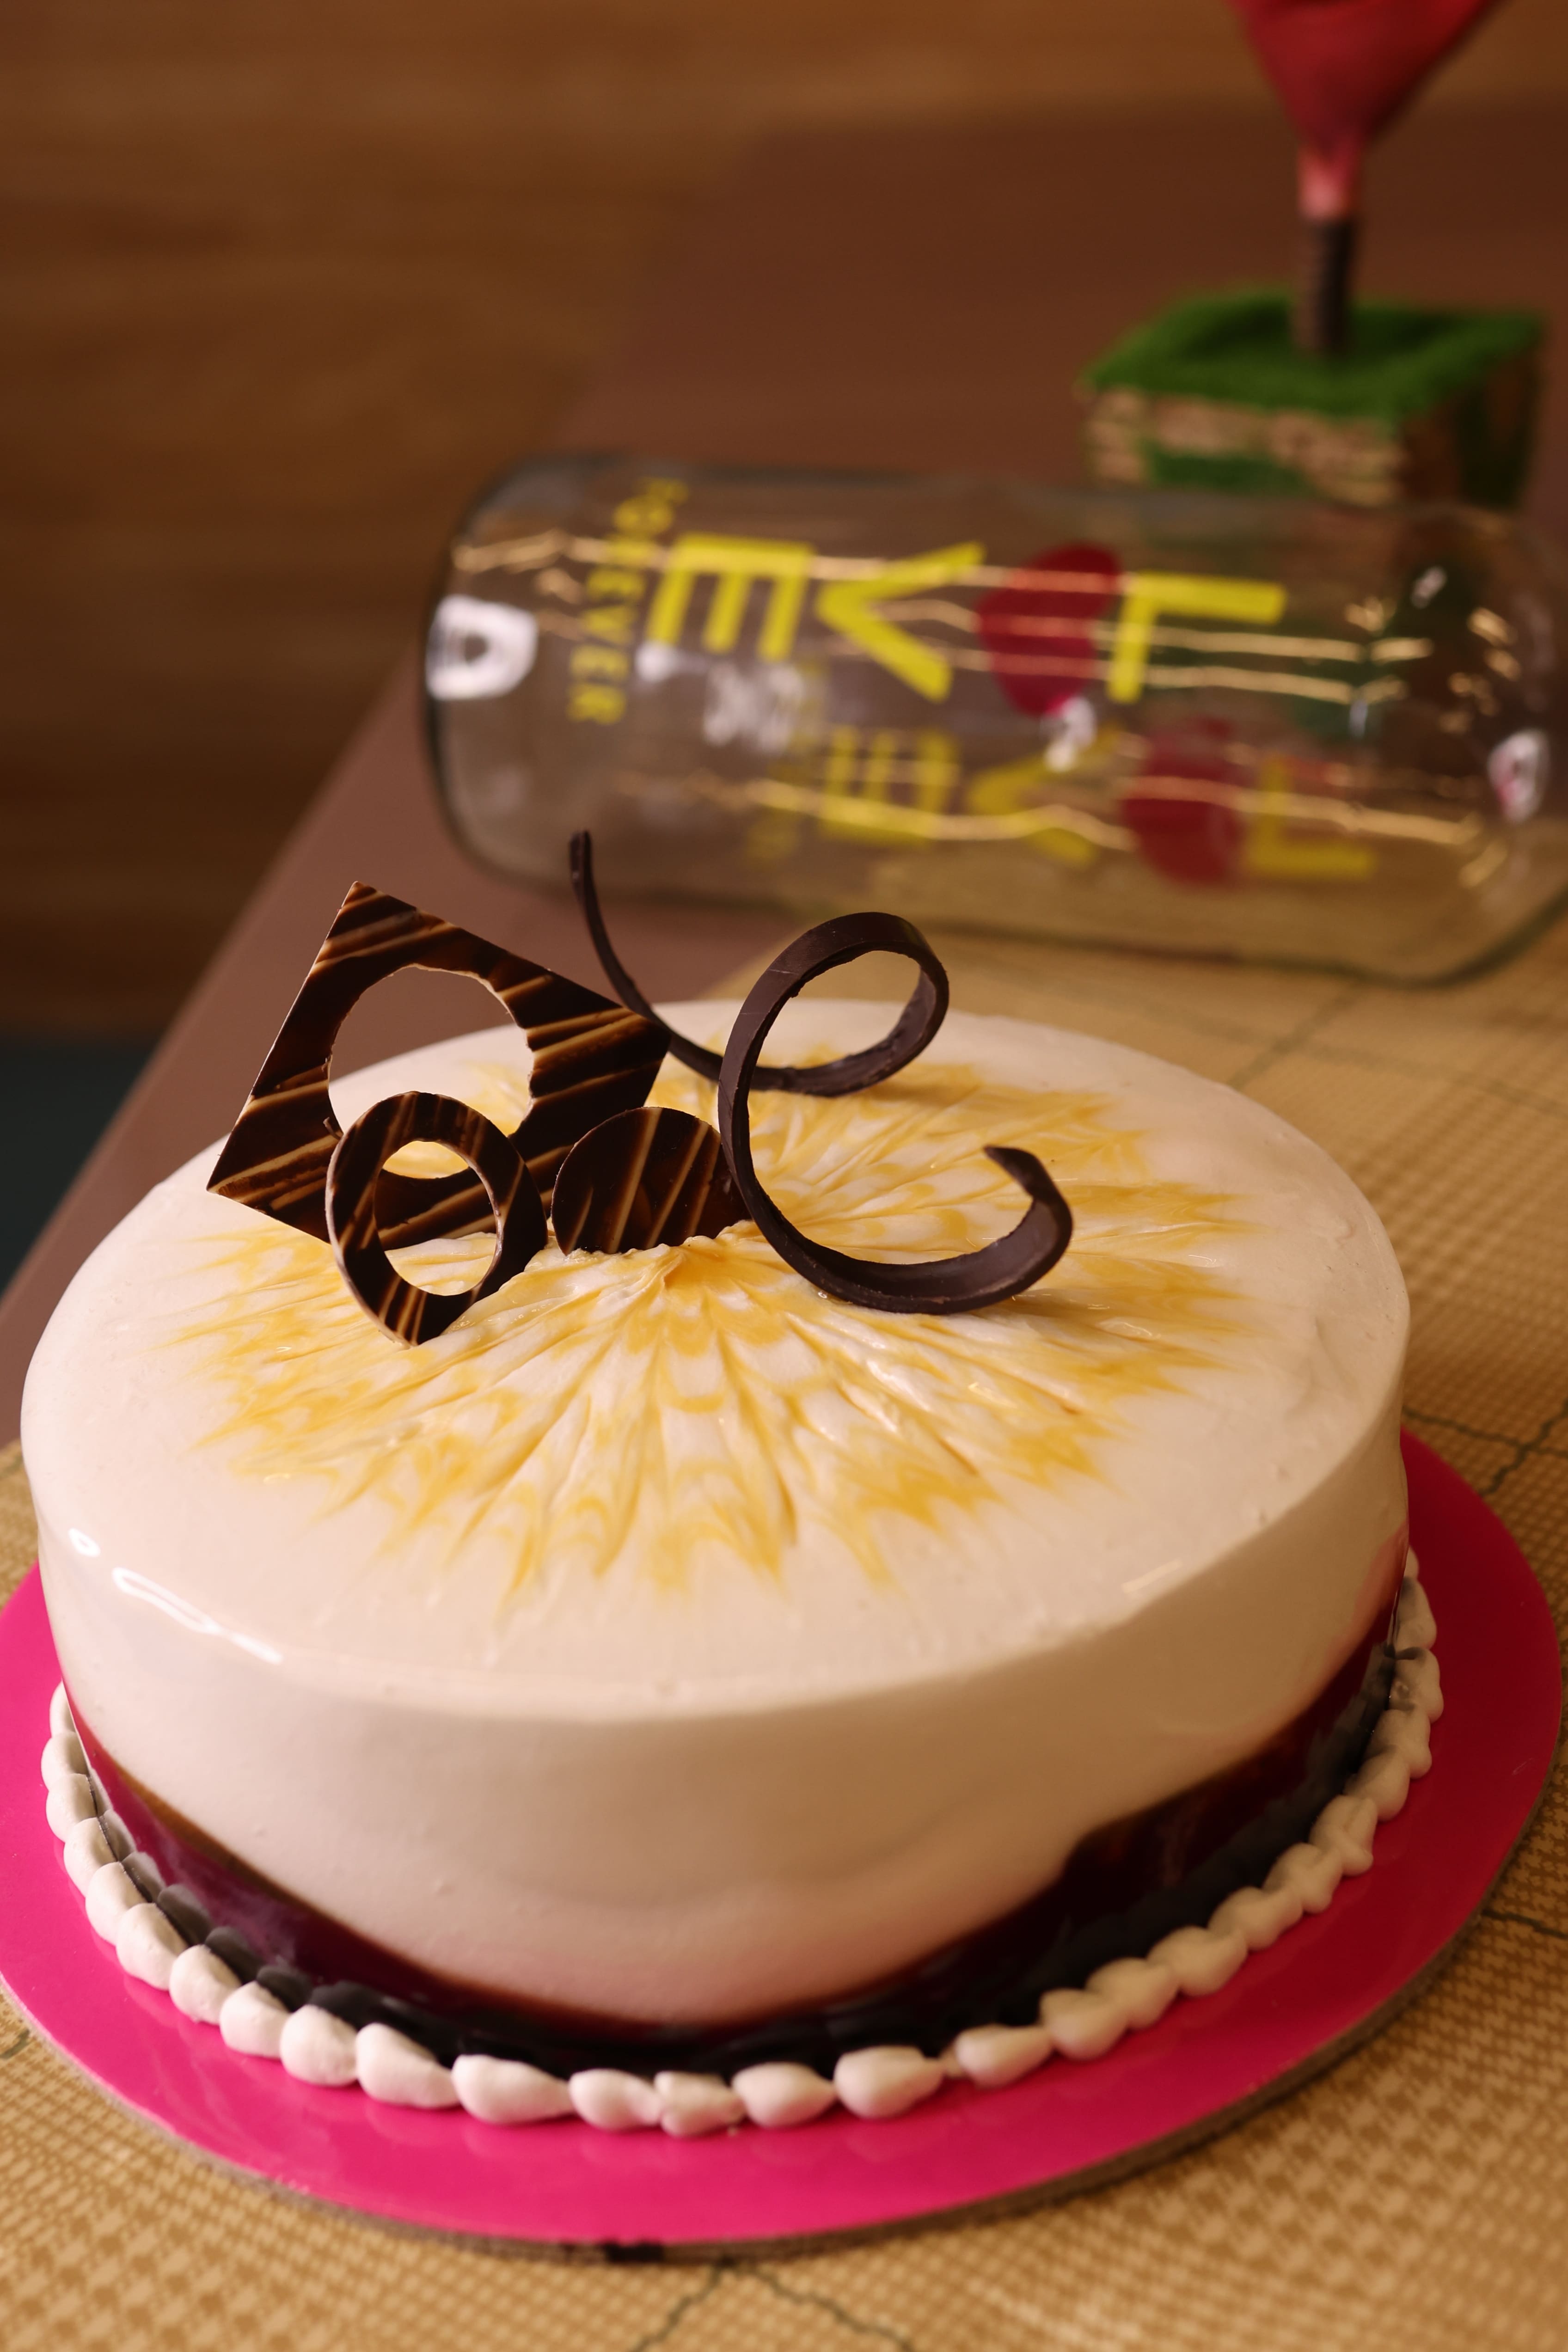 Online Cake Delivery | Vanilla Birthday Cake | Winni.in | Winni.in